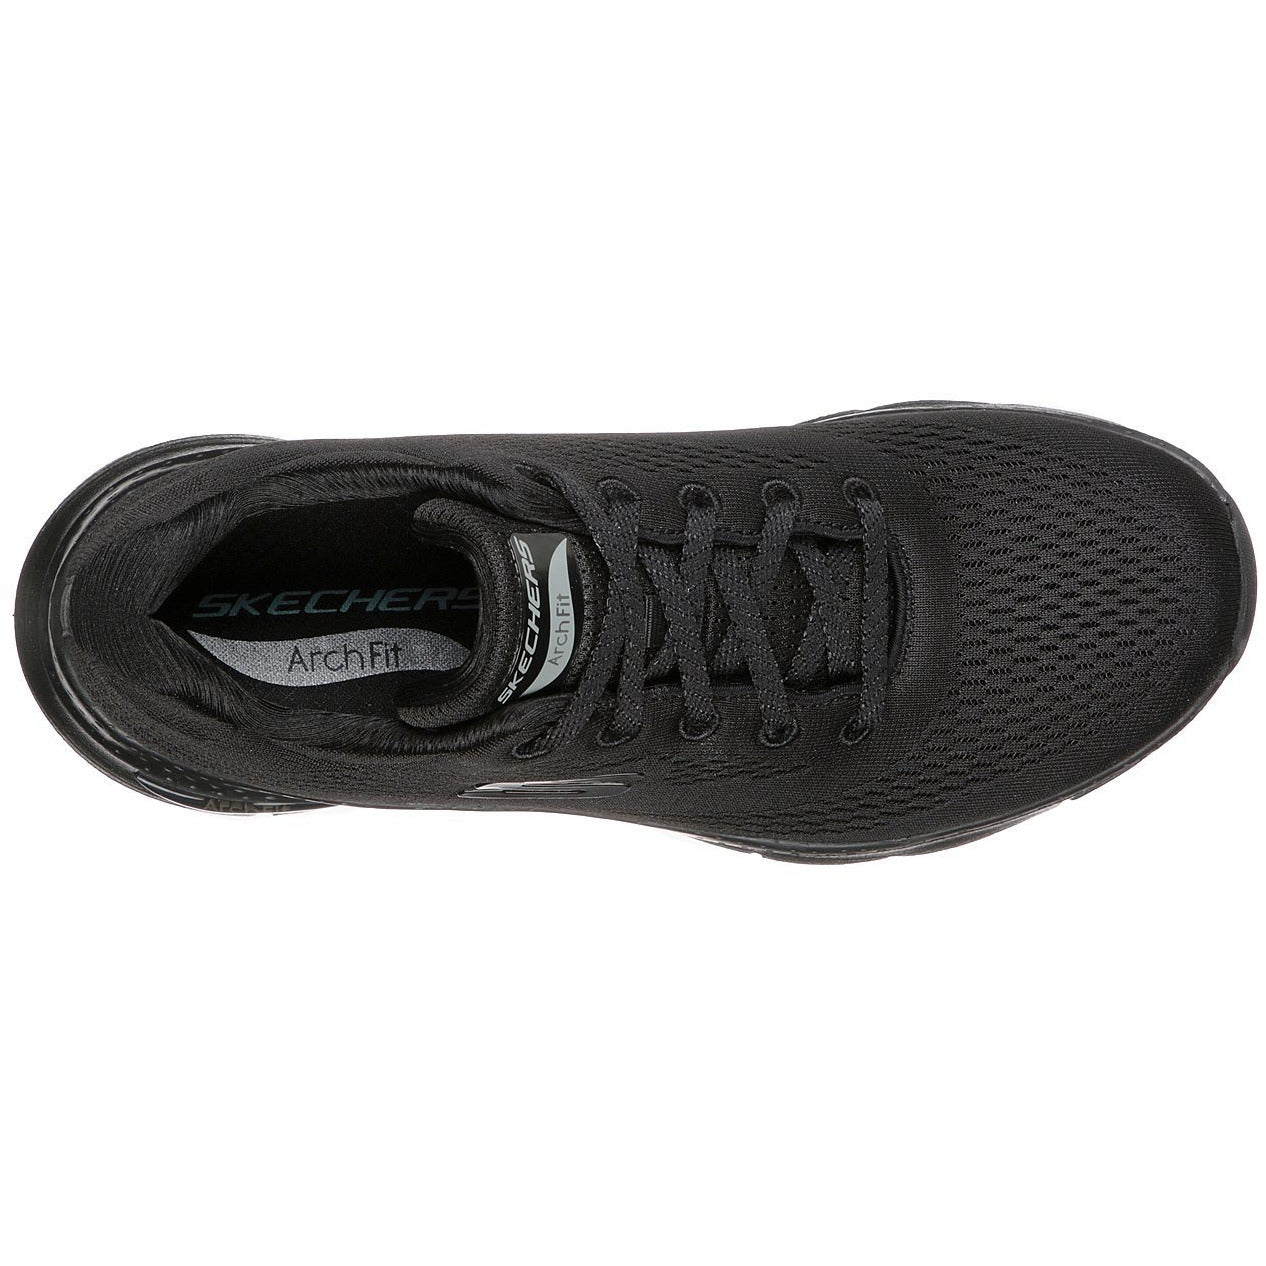 SKECHERS ARCH FIT - SUNNY OUTLOOK BLACK - getset-footwear.myshopify.com